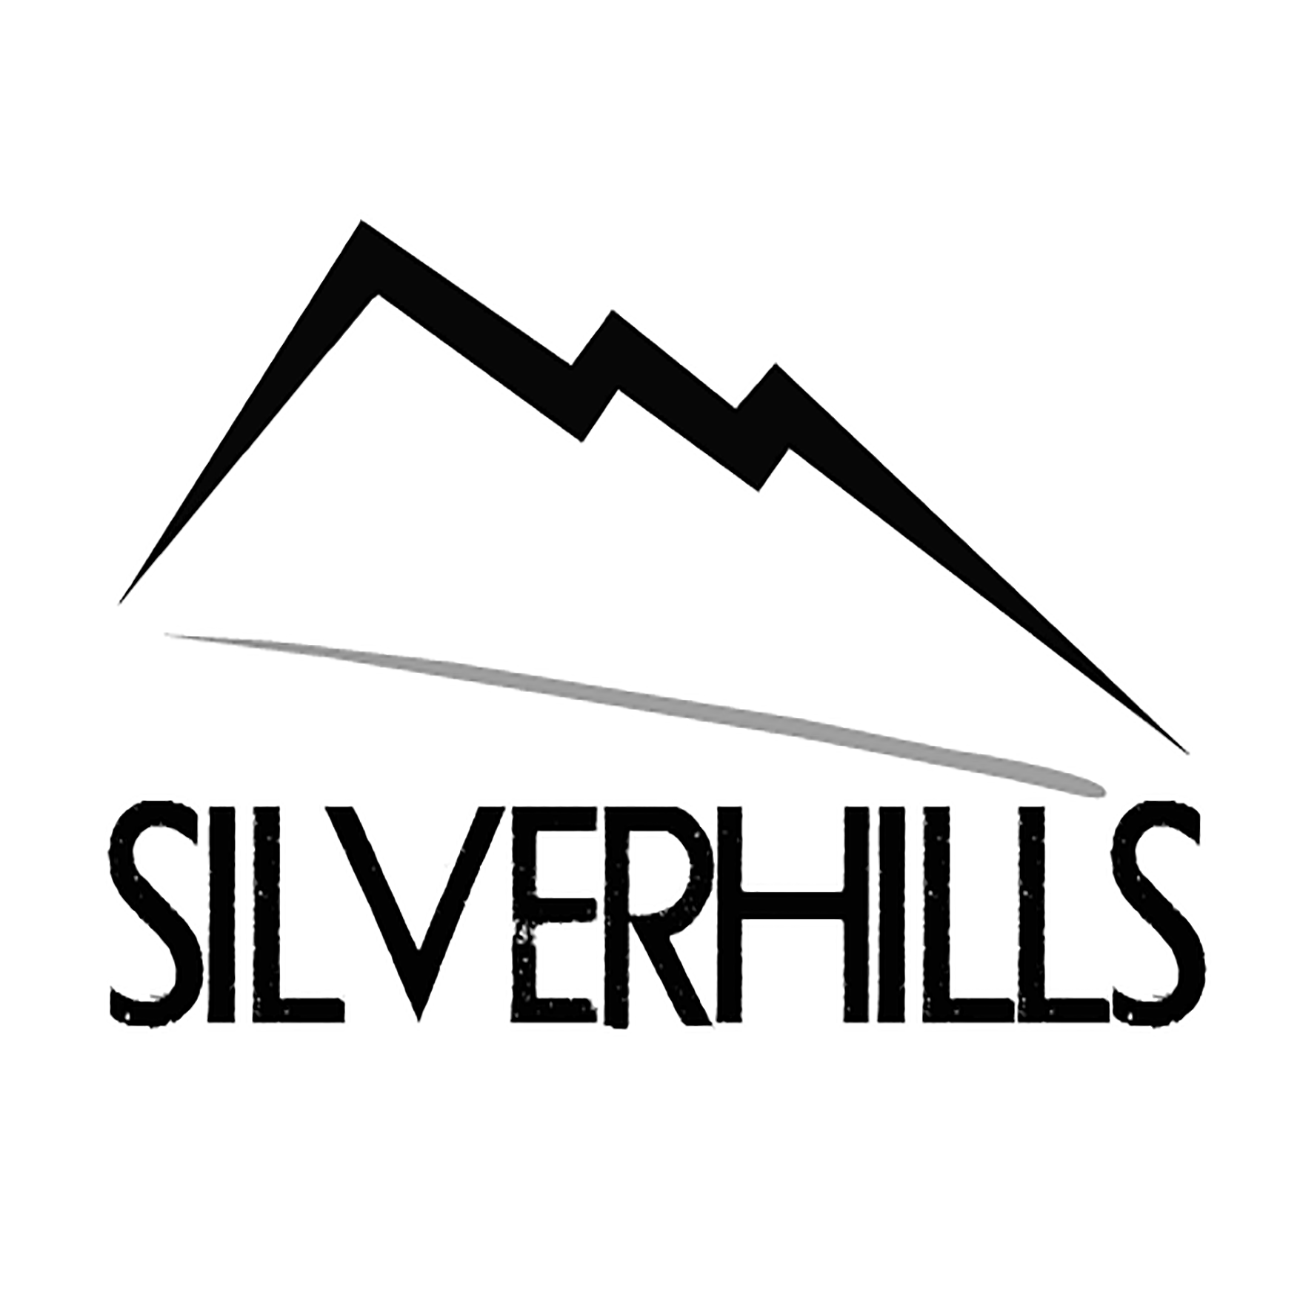 Silverhill's Logo